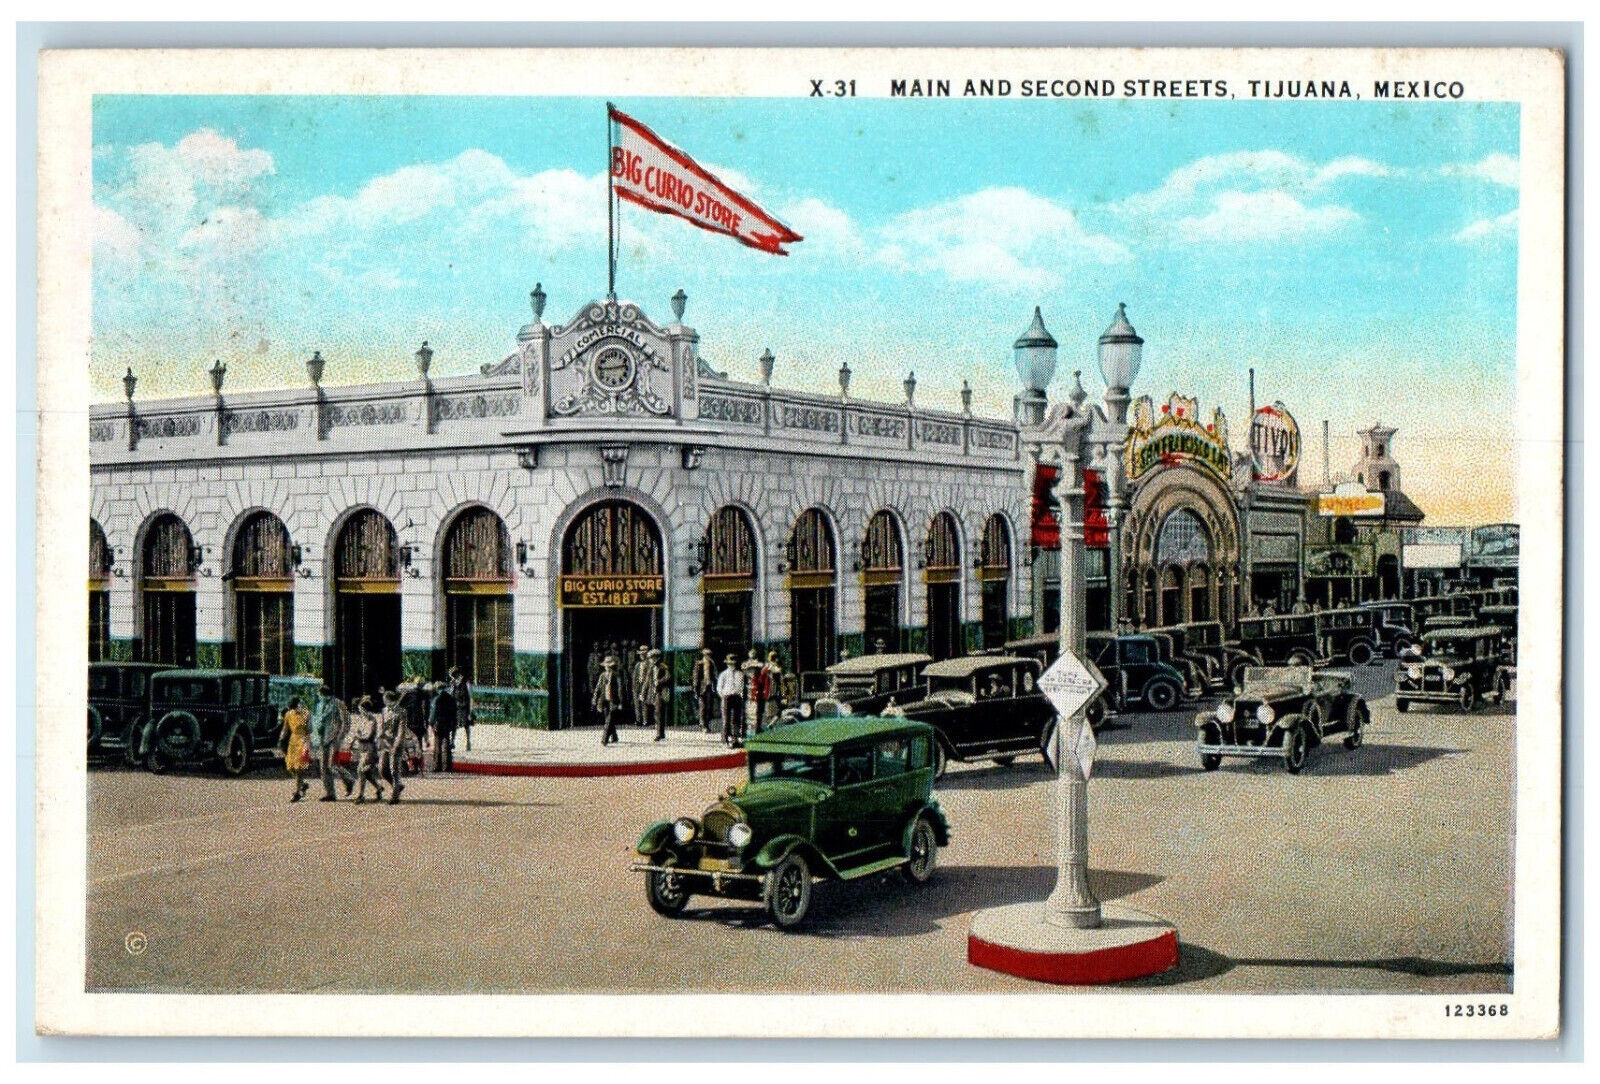 1939 Big Curio Store Main and Second Streets Tijuana Mexico Vintage Postcard